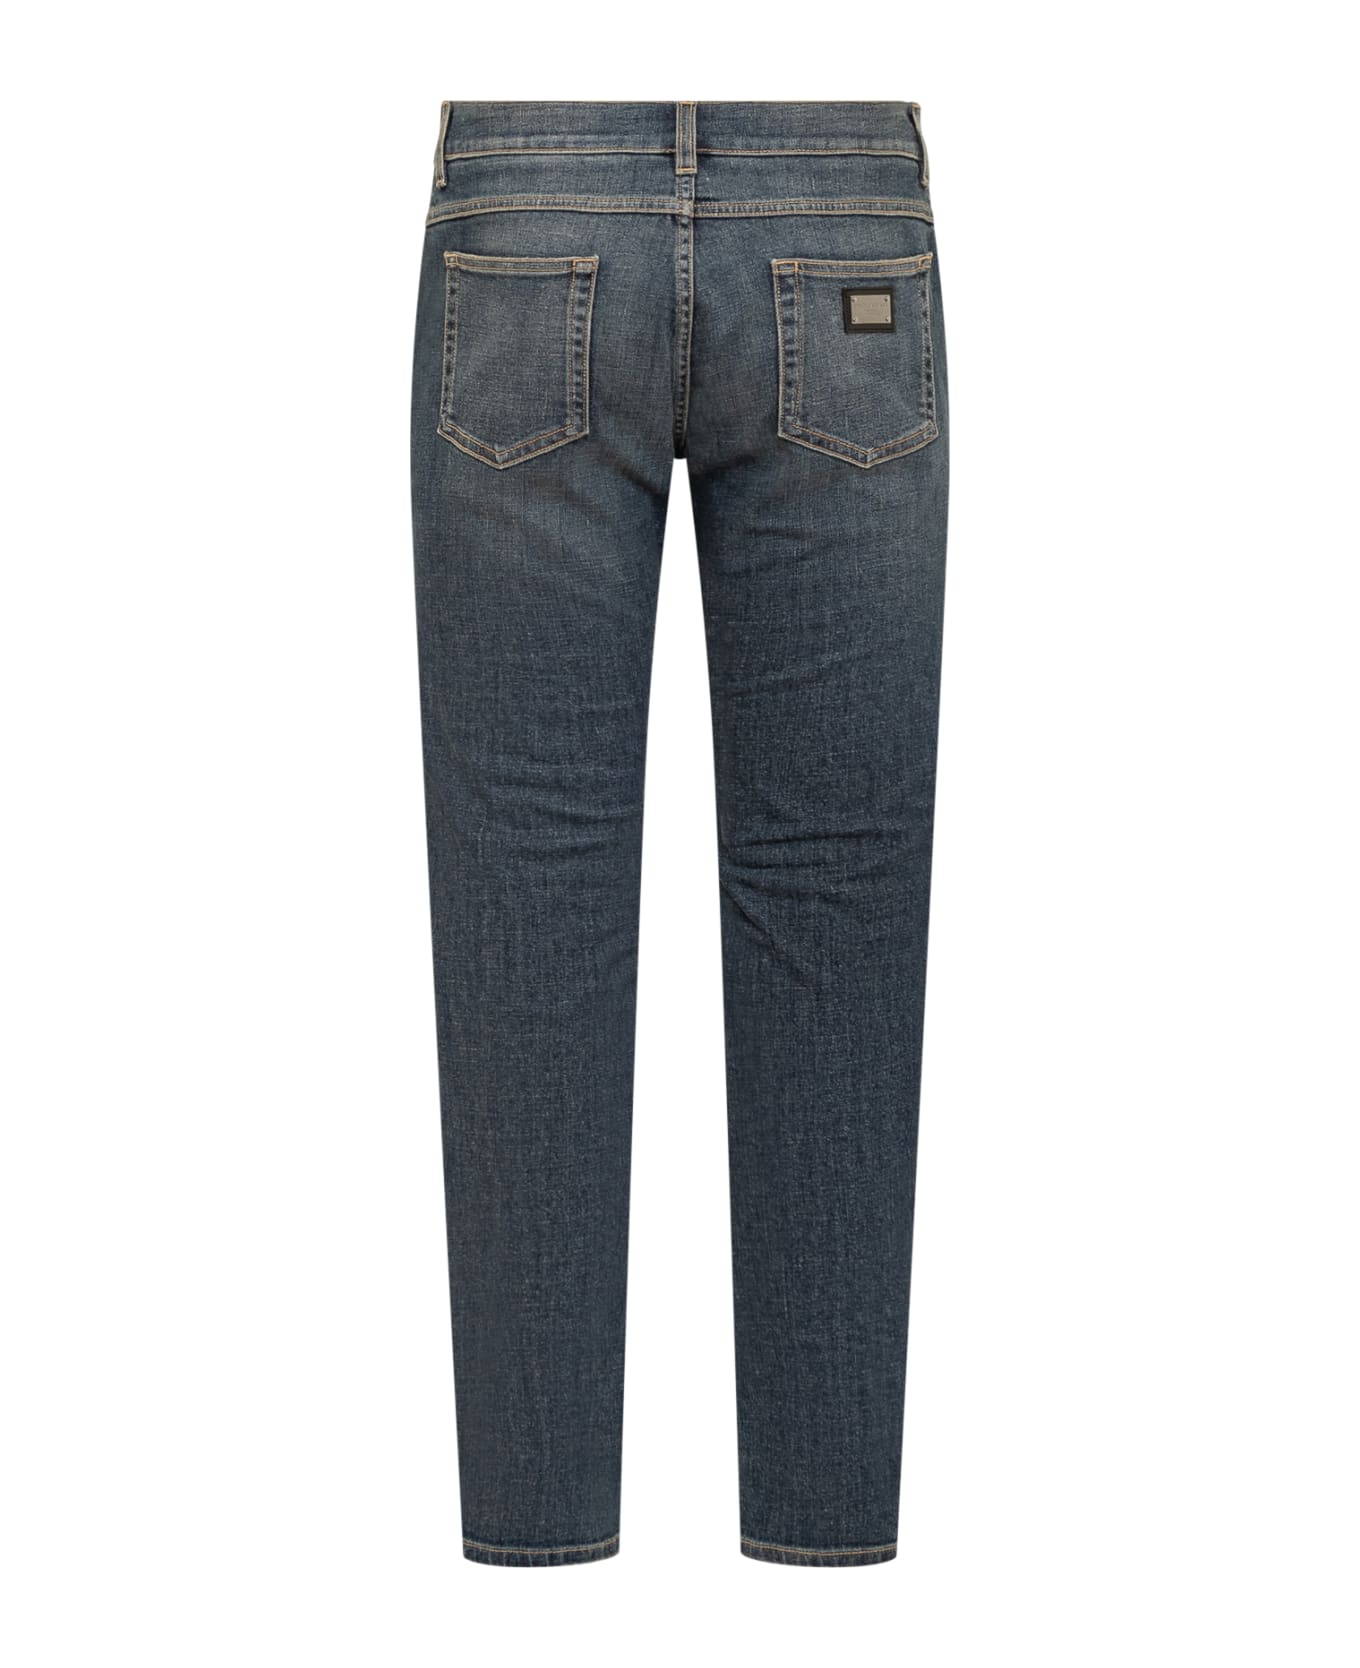 Dolce & Gabbana Slim Fit Jeans - Denim